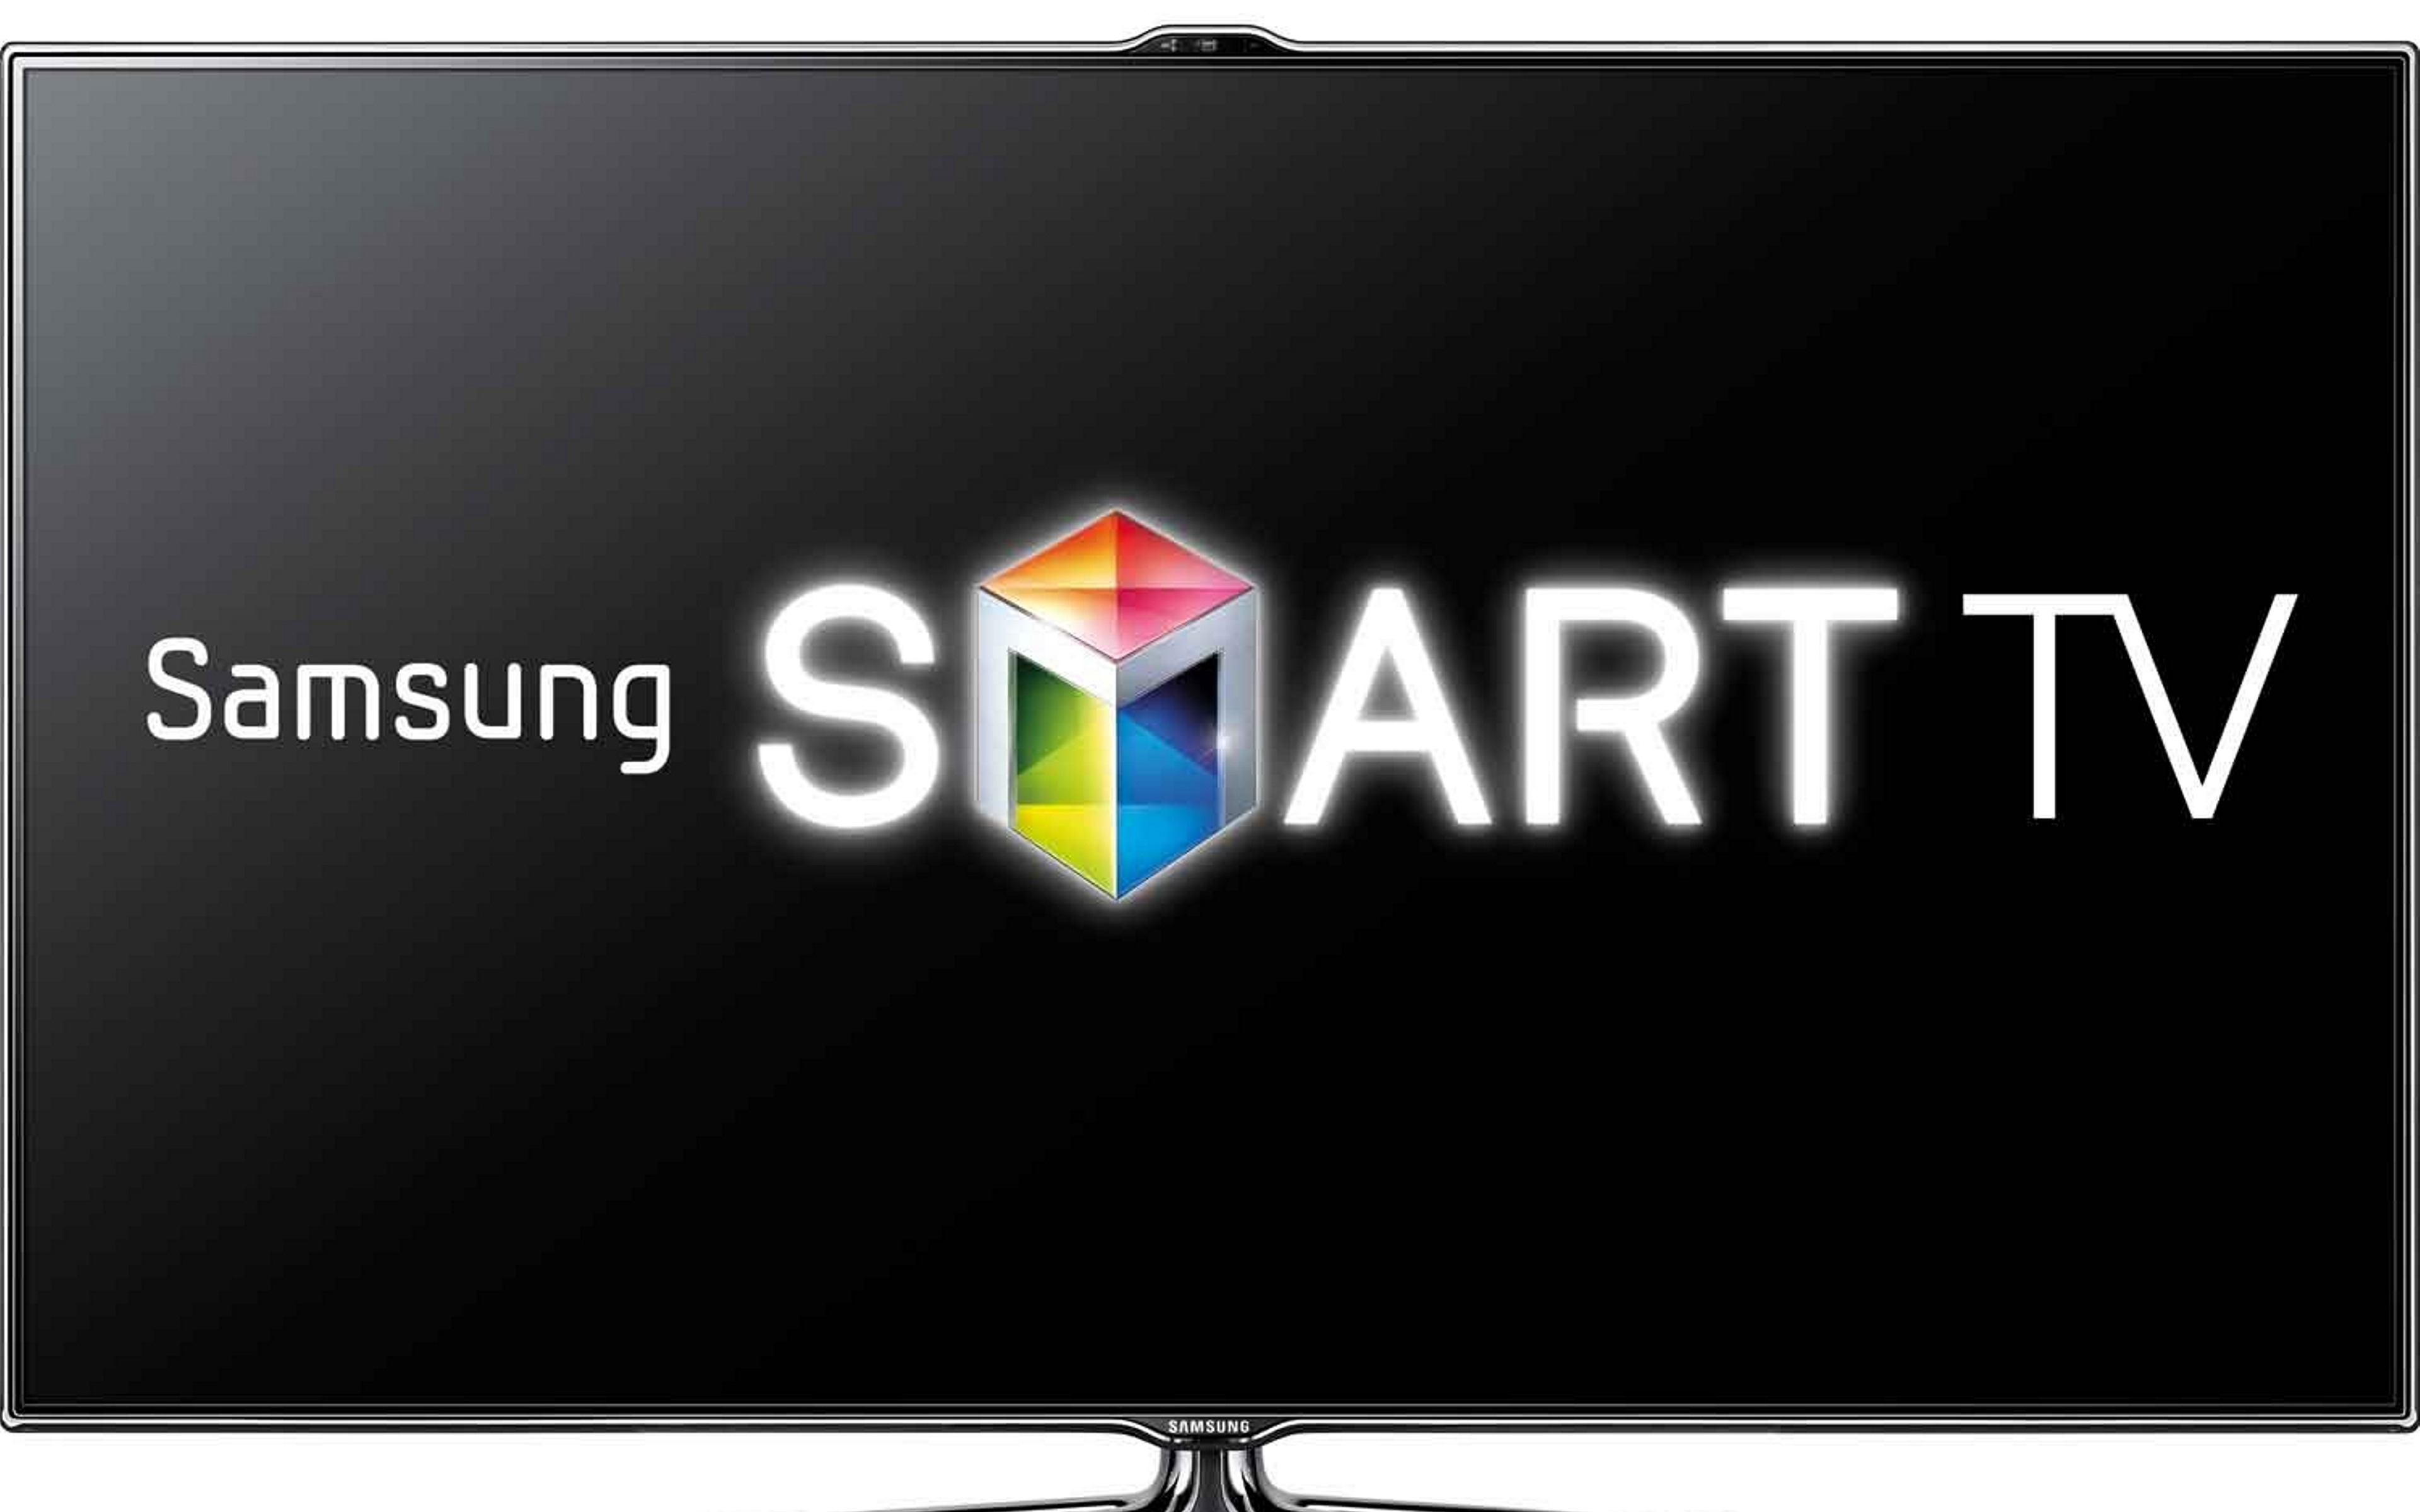 Download wallpaper 3840x2400 samsung smart tv 4k ultra hd 1610